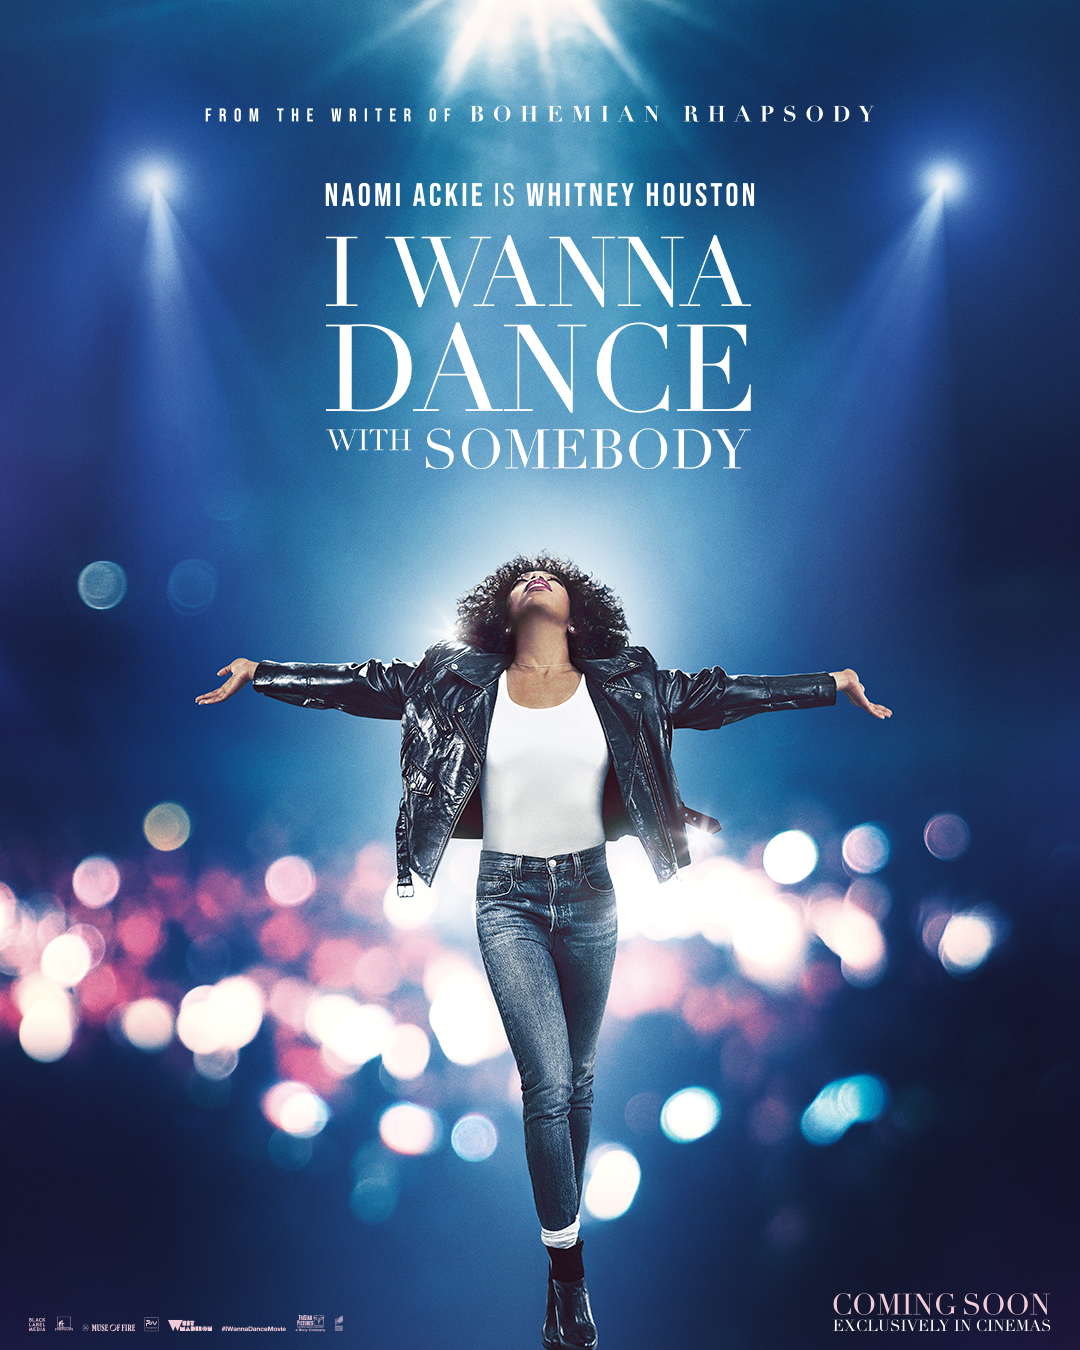 Harper's Bazaar_phim chiếu tạp I Wanna Dance with Somebody về Whitney Houston_01 